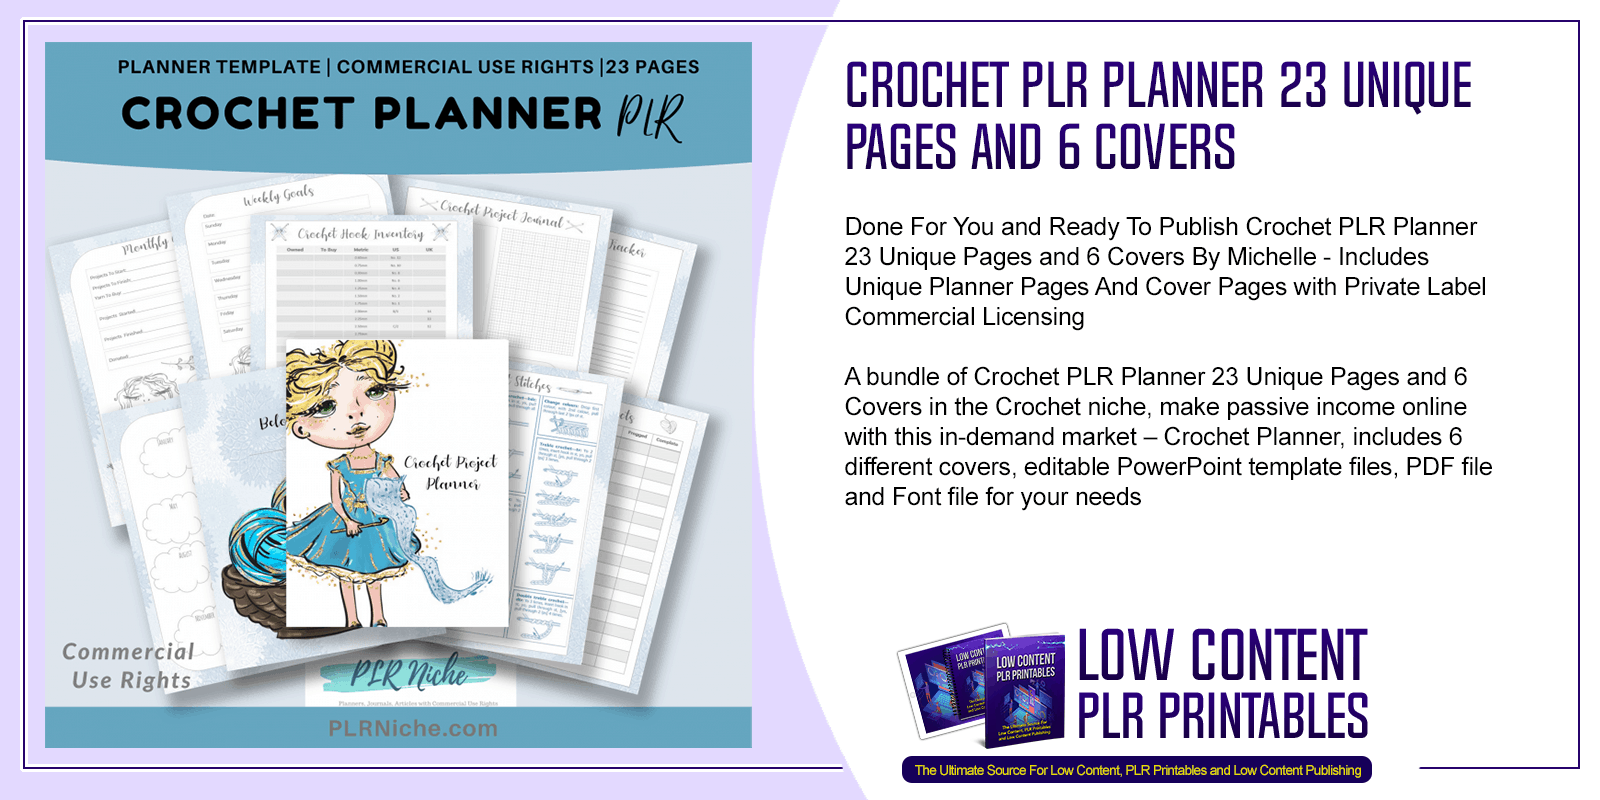 Crochet PLR Planner 23 Unique Pages and 6 Covers